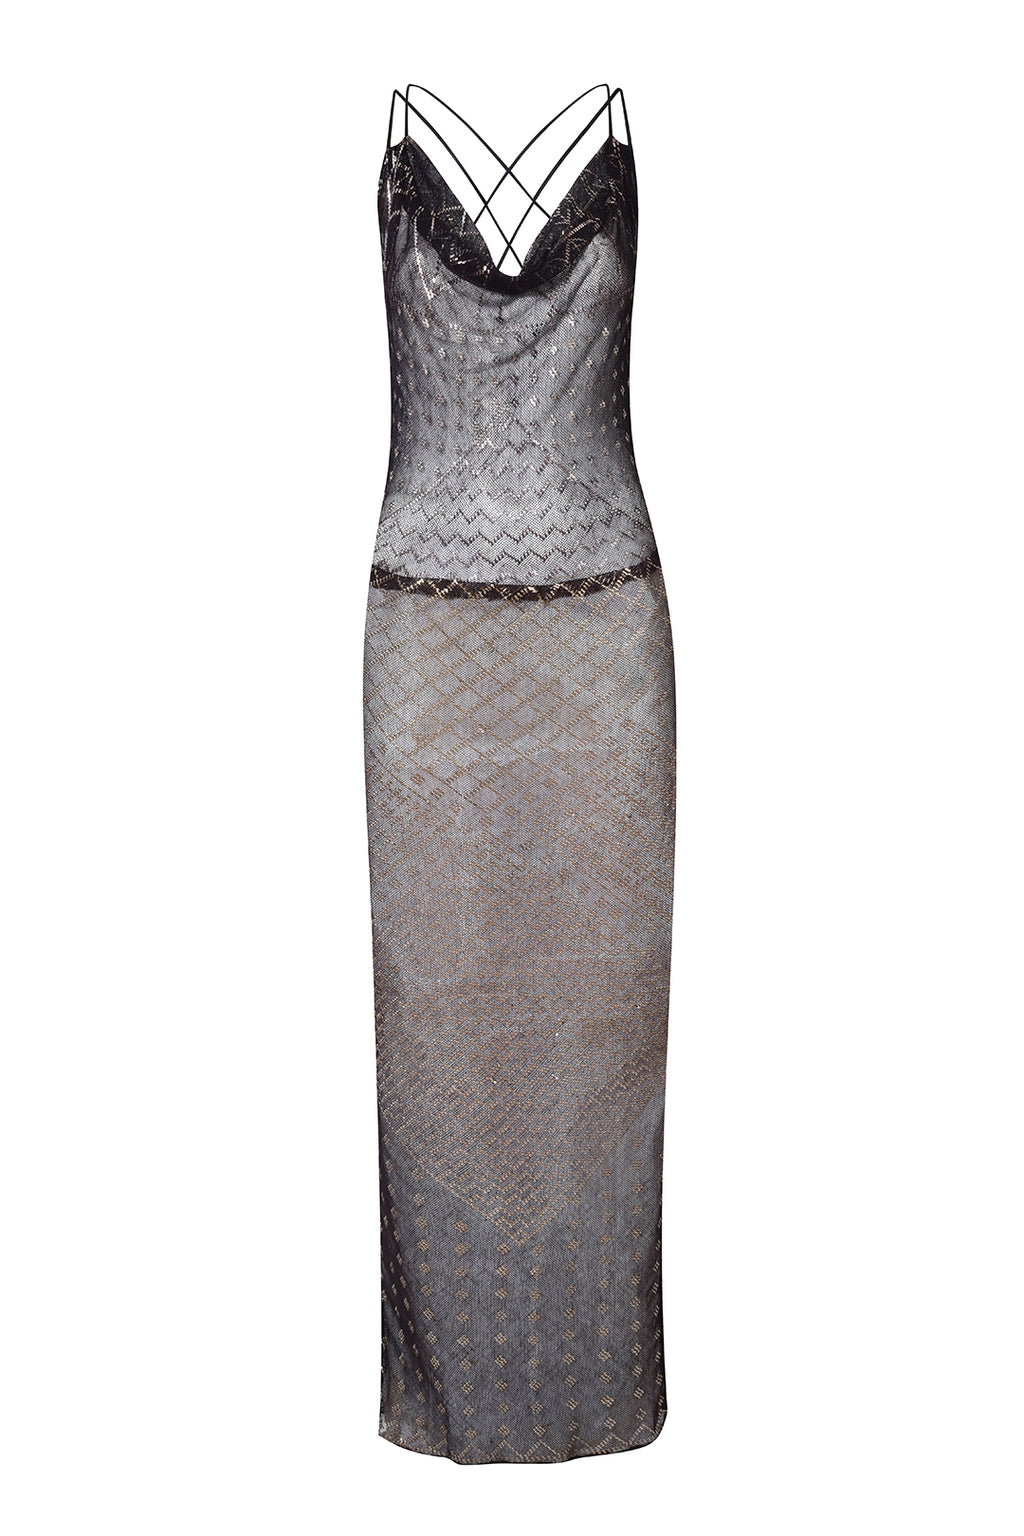 1920's Egyptian Strap Assuit Dress